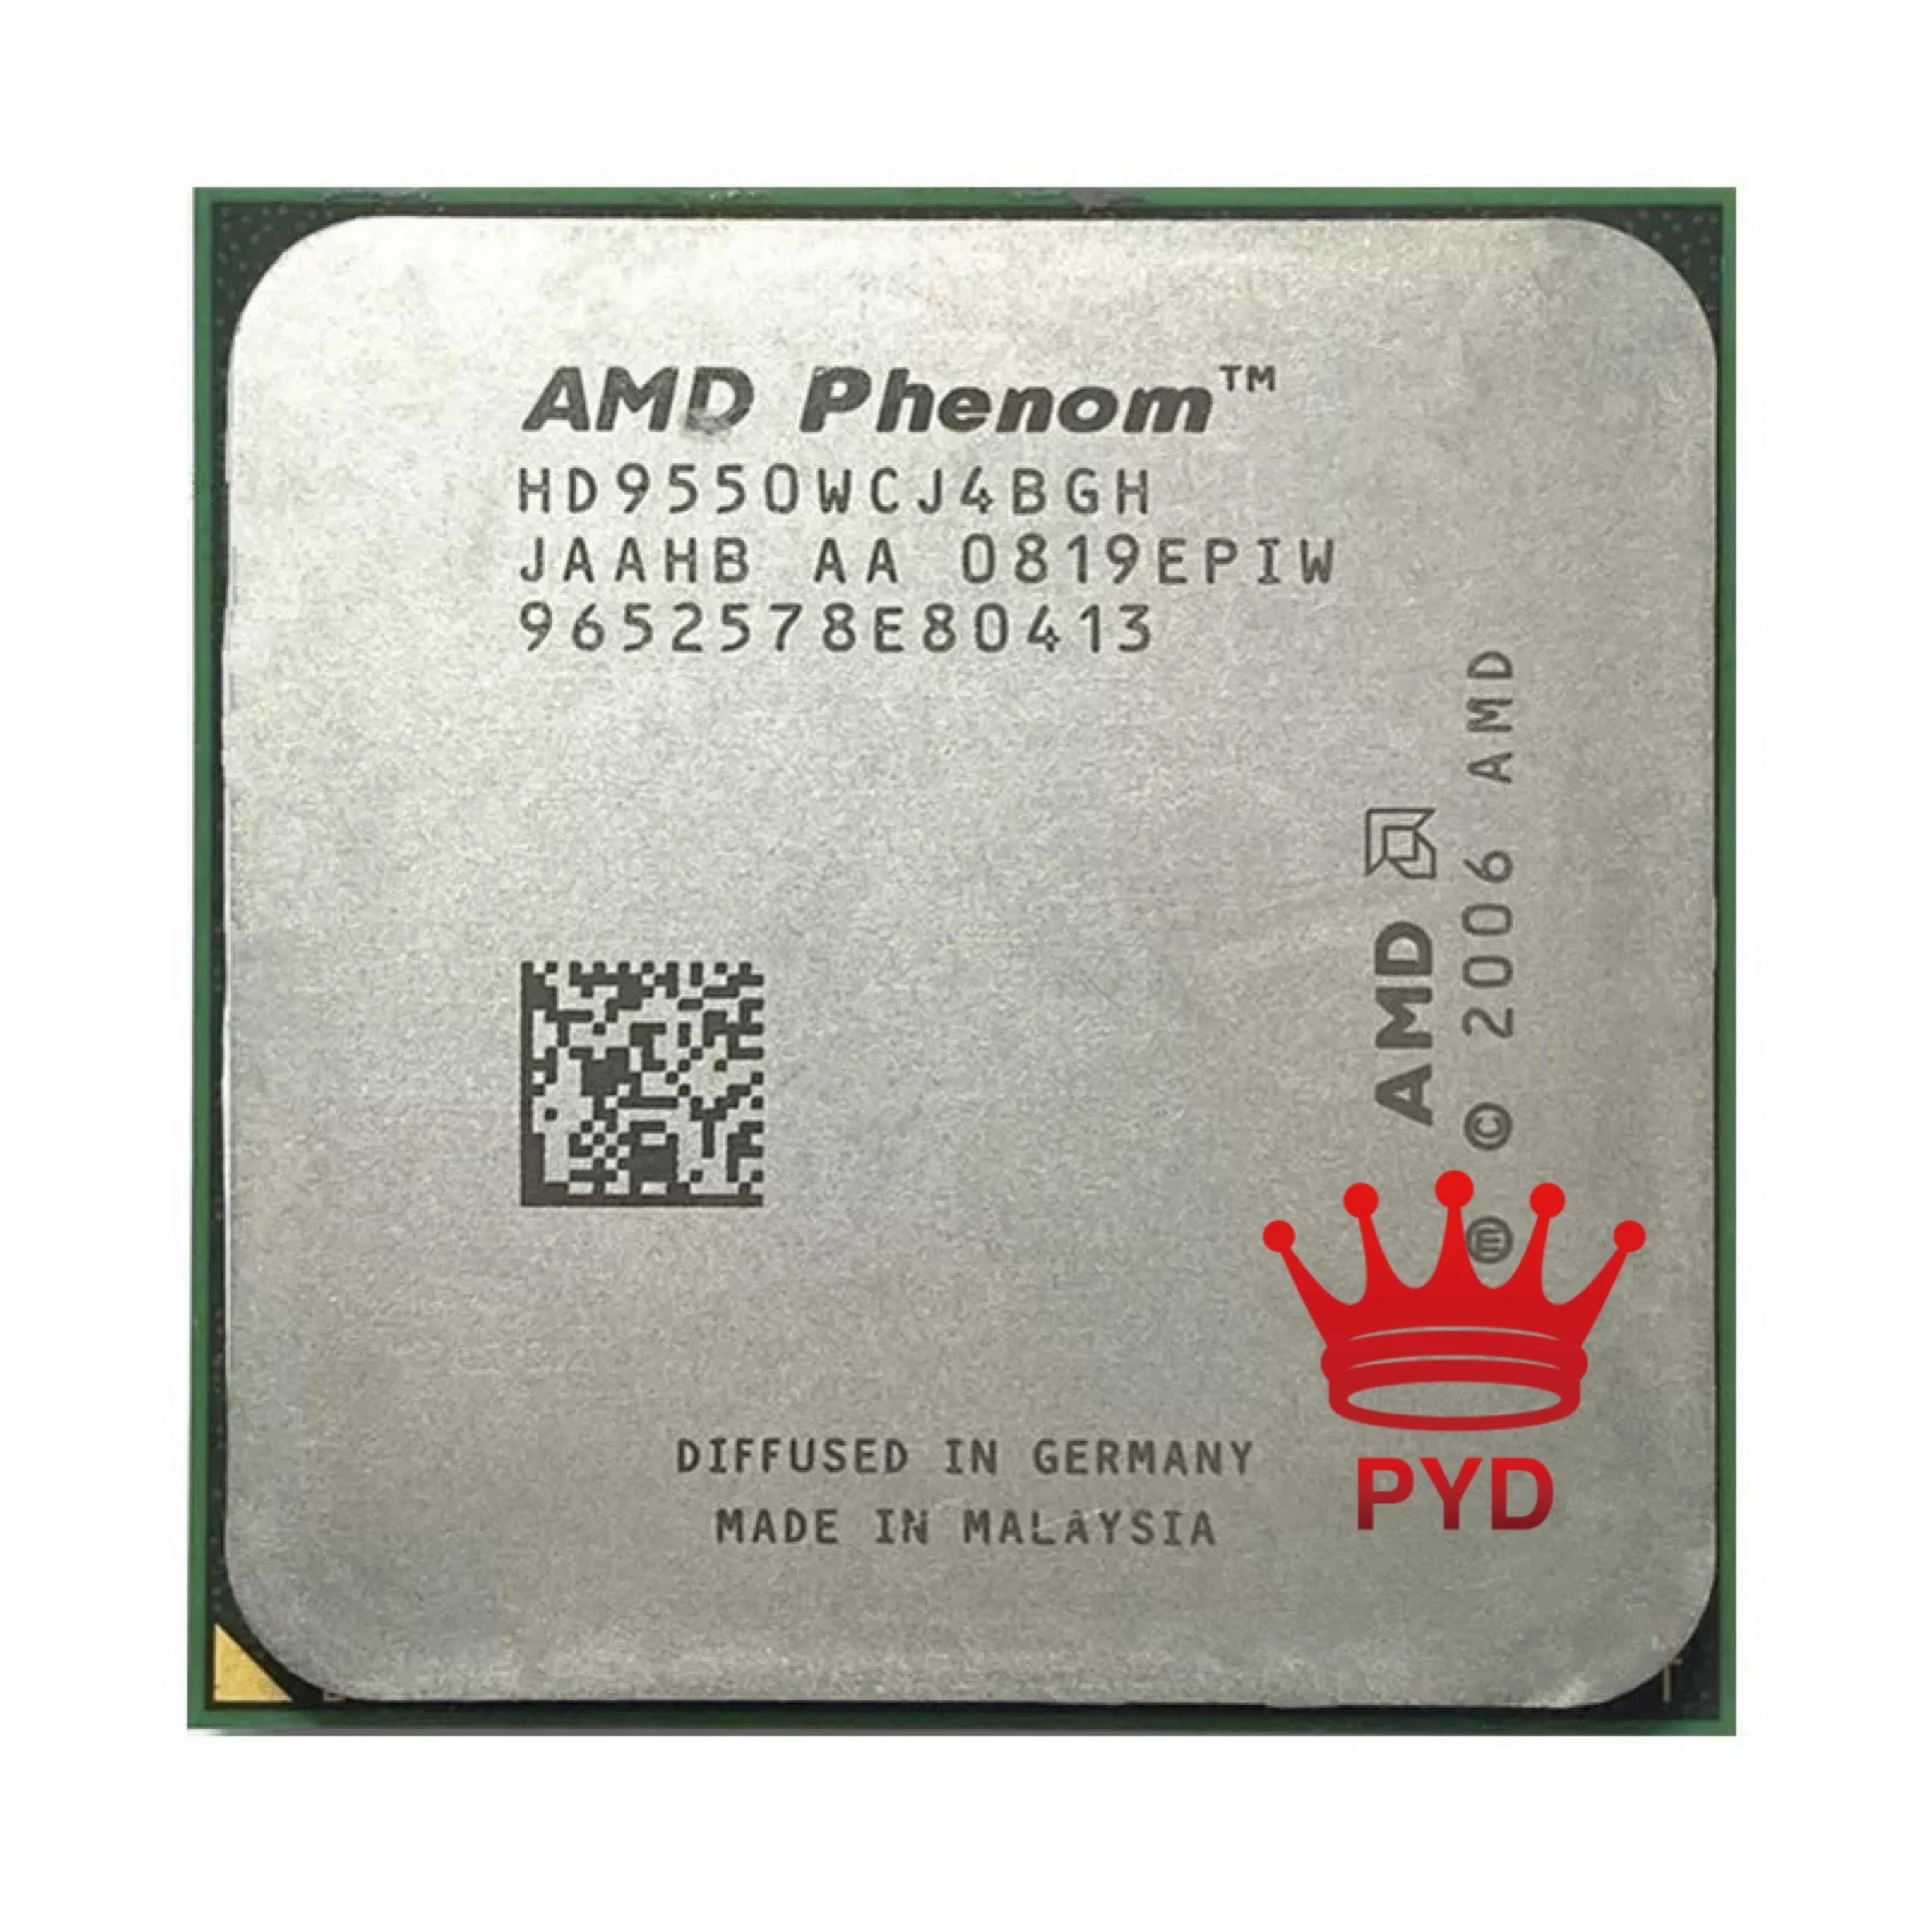 AMD Phenom X4 9550 2.2 GHz Quad-Core CPU Processor HD9550WCJ4BGH Socket AM2+ most powerful cpu